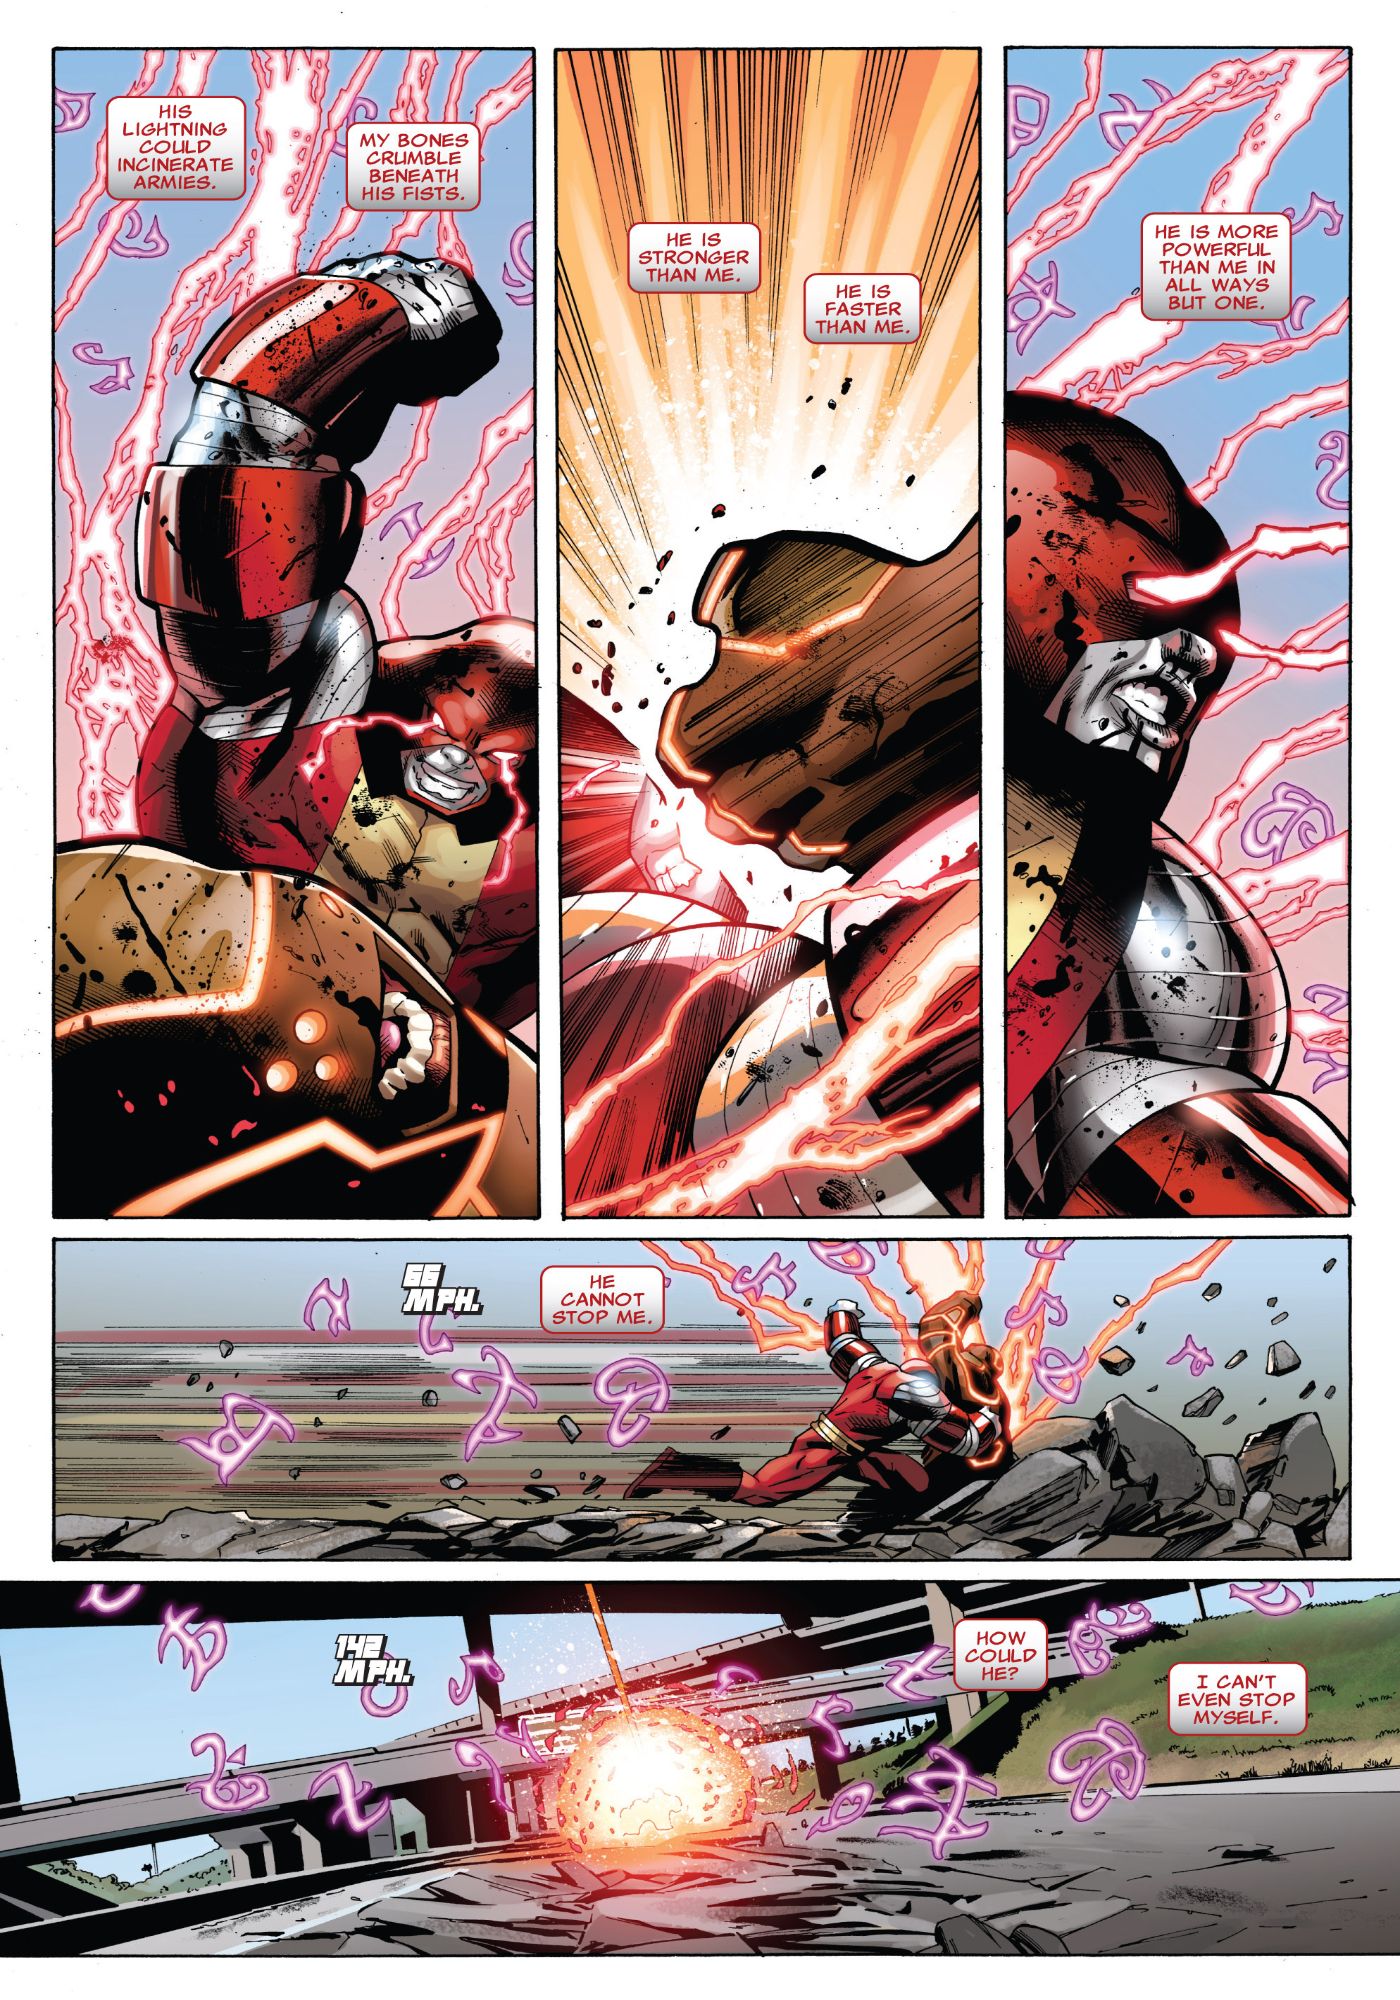 How Marvel’s Ultimate Juggernaut Beat The Original